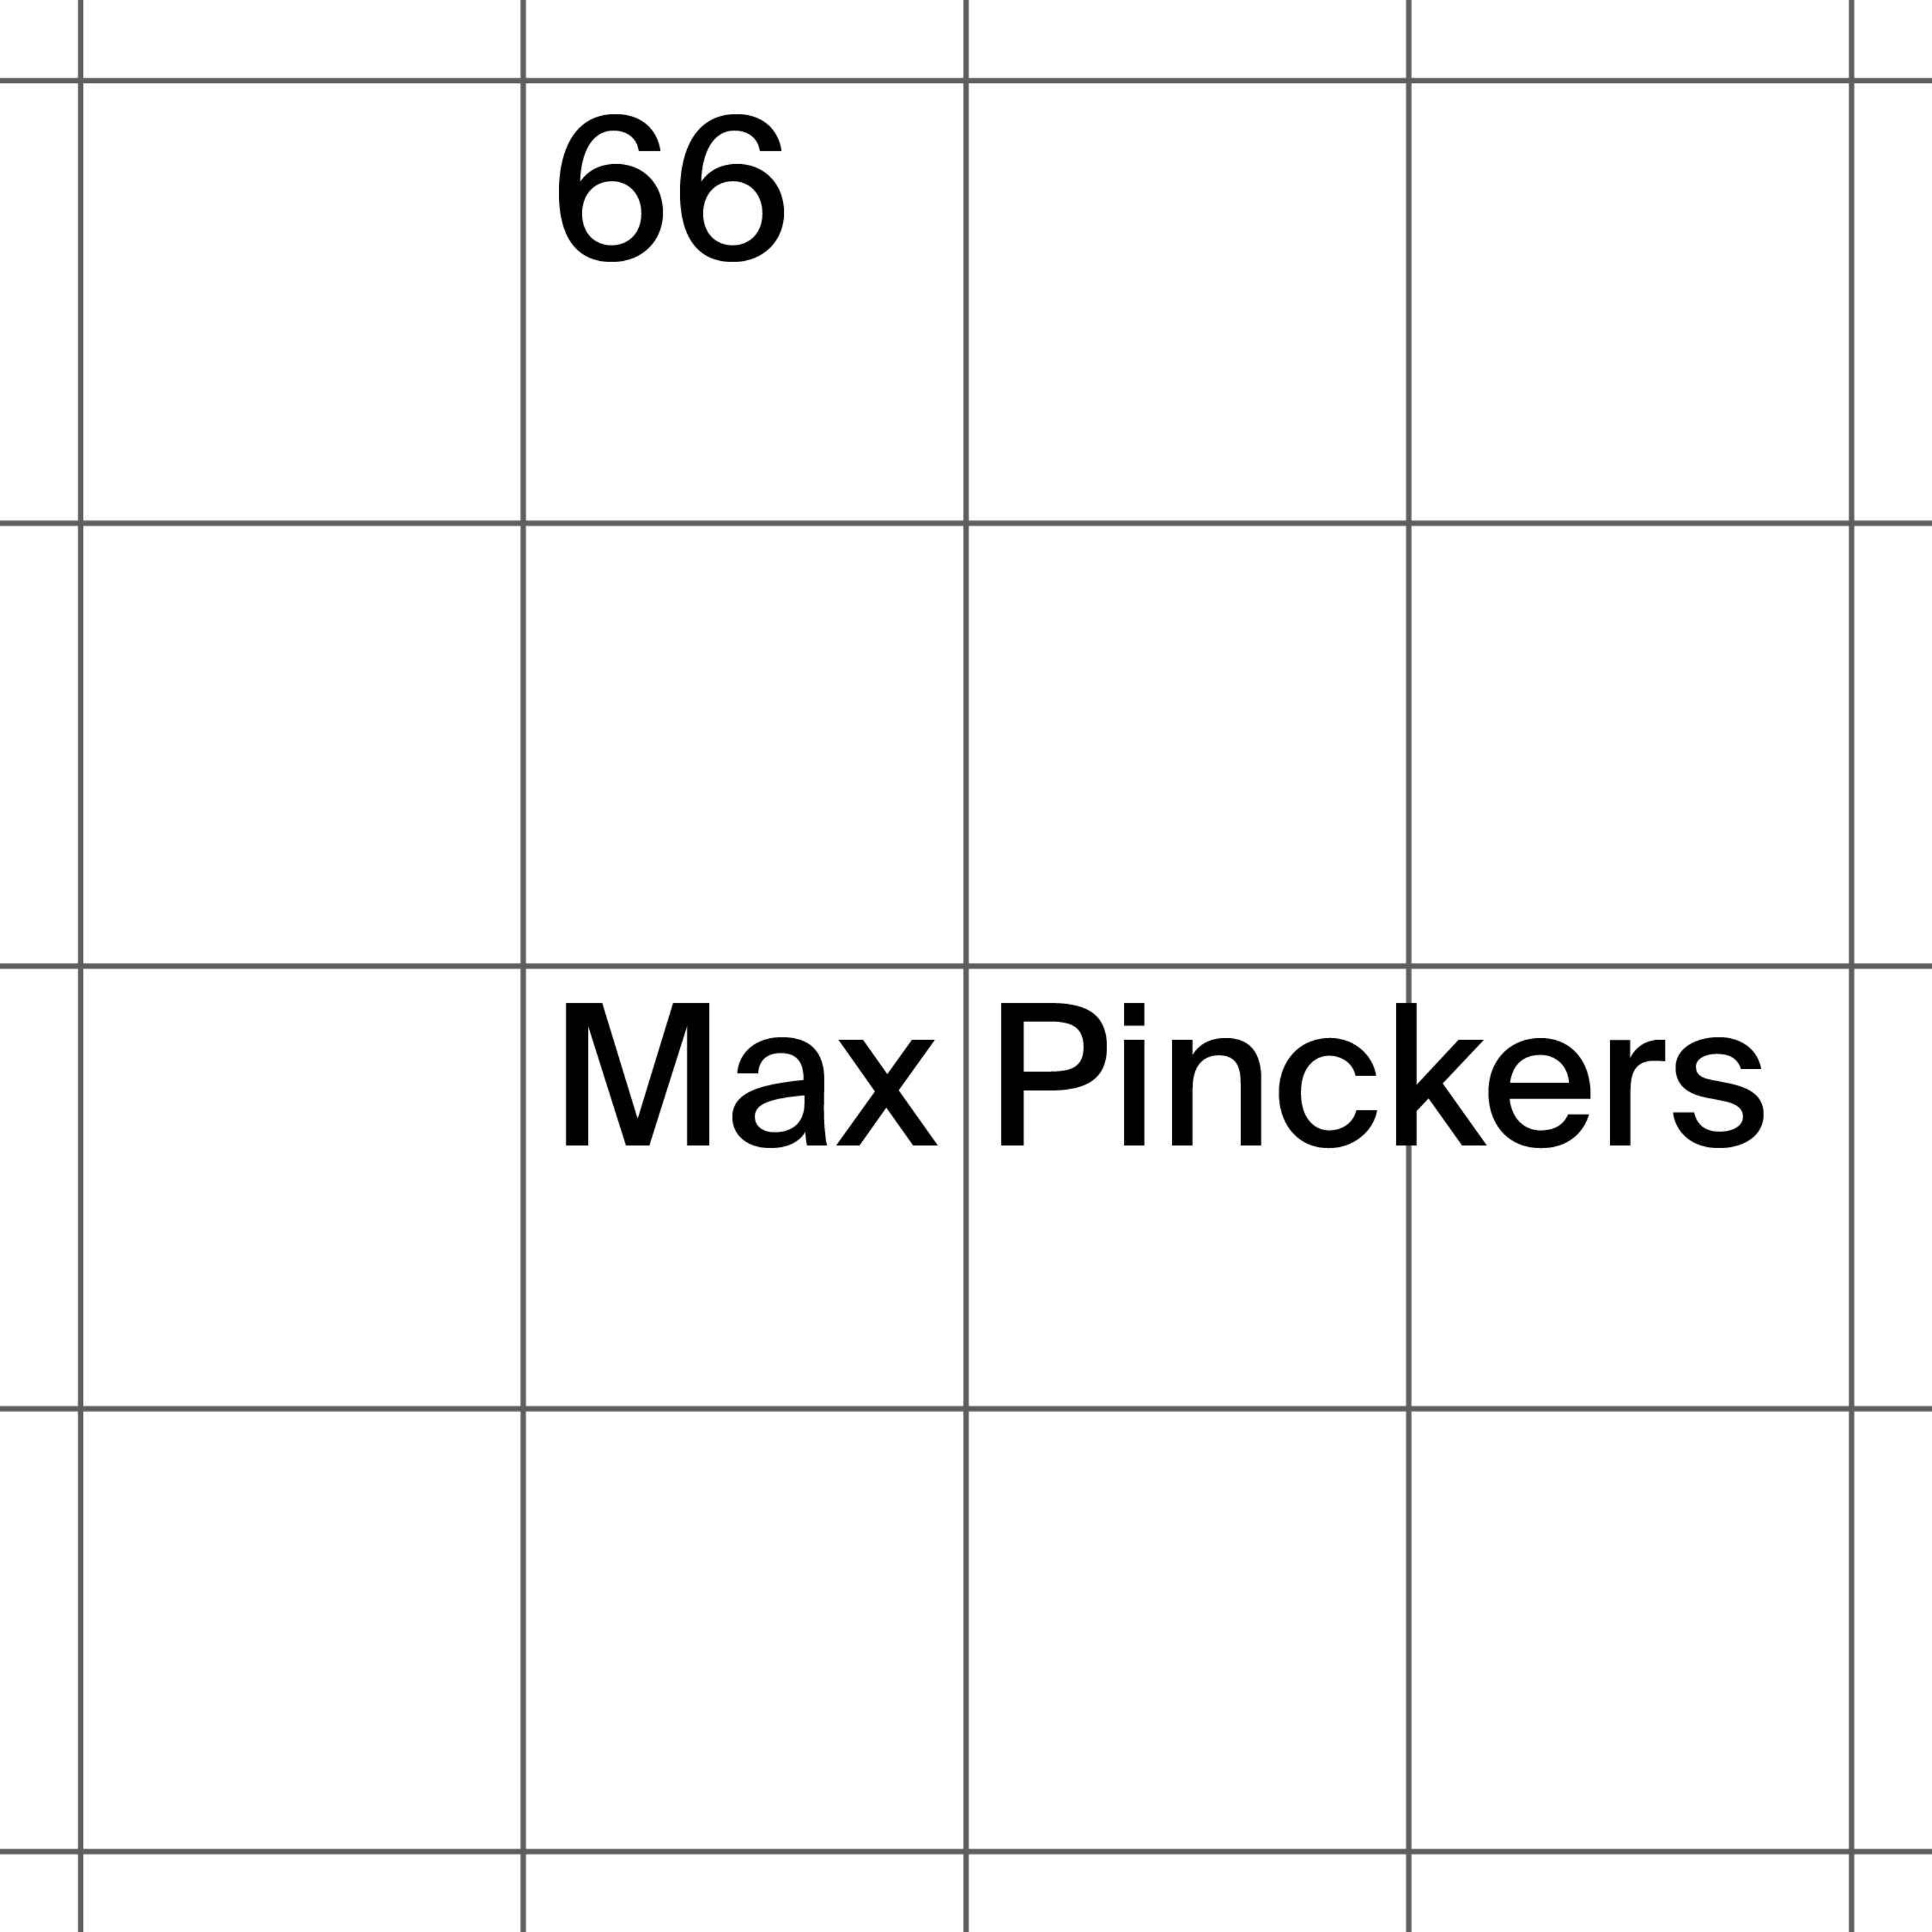 66: Max Pinckers